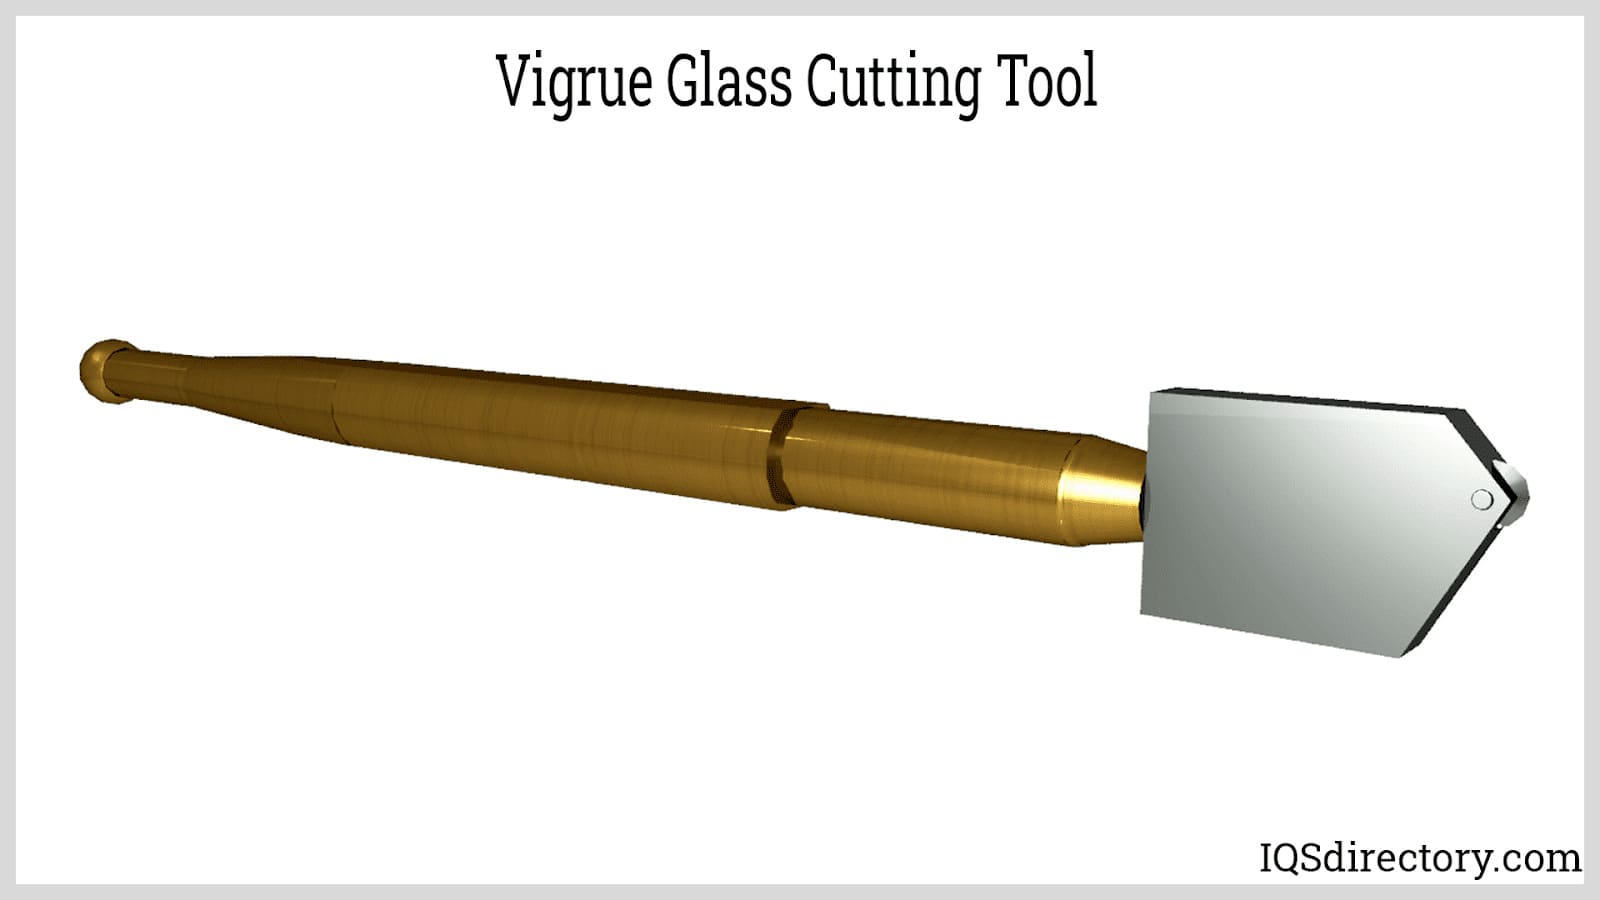 Vigrue Glass Cutting Tool